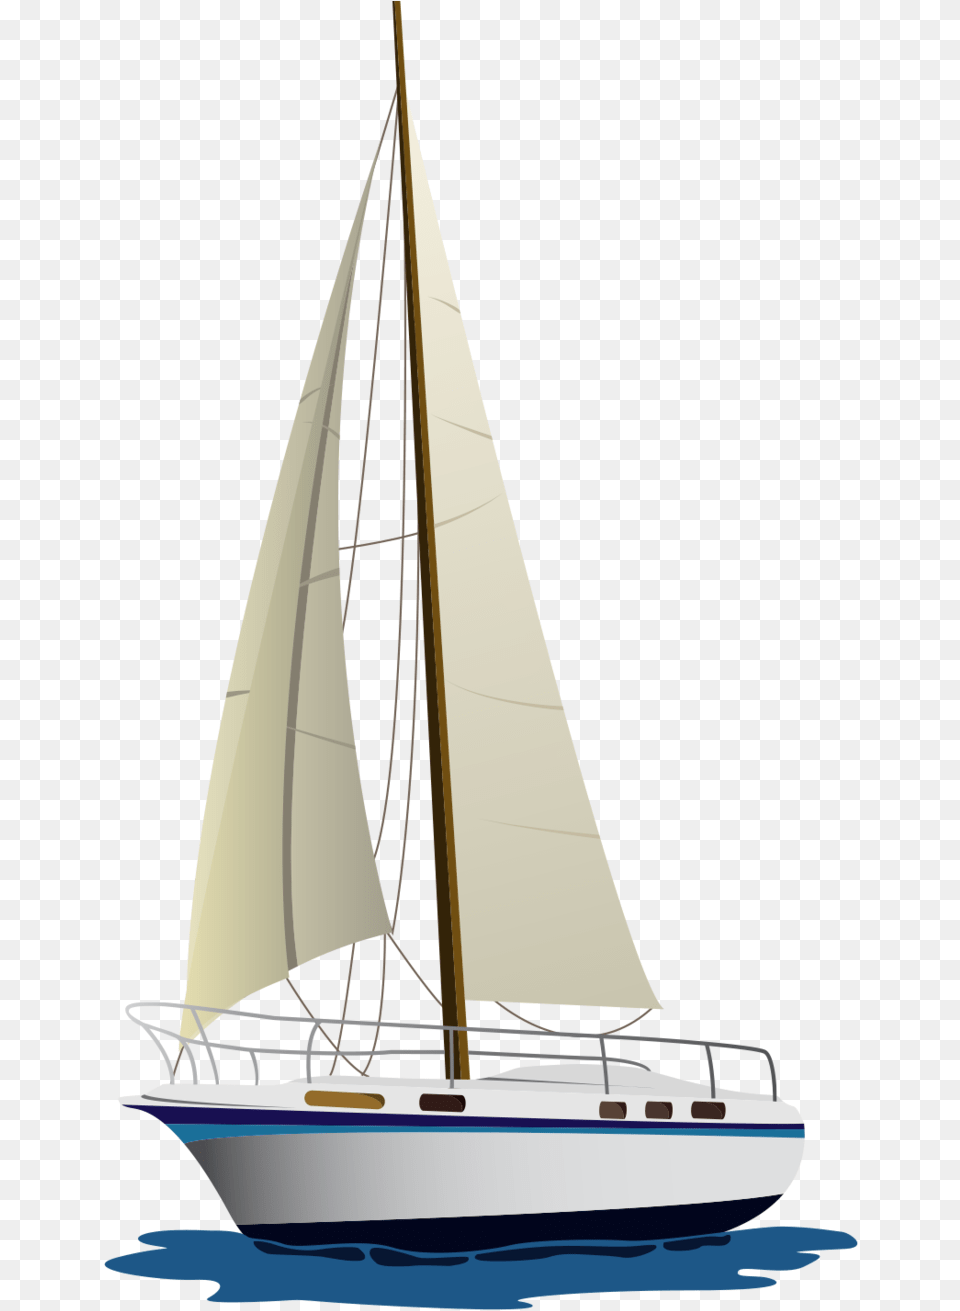 Sailboat, Boat, Transportation, Vehicle, Yacht Png